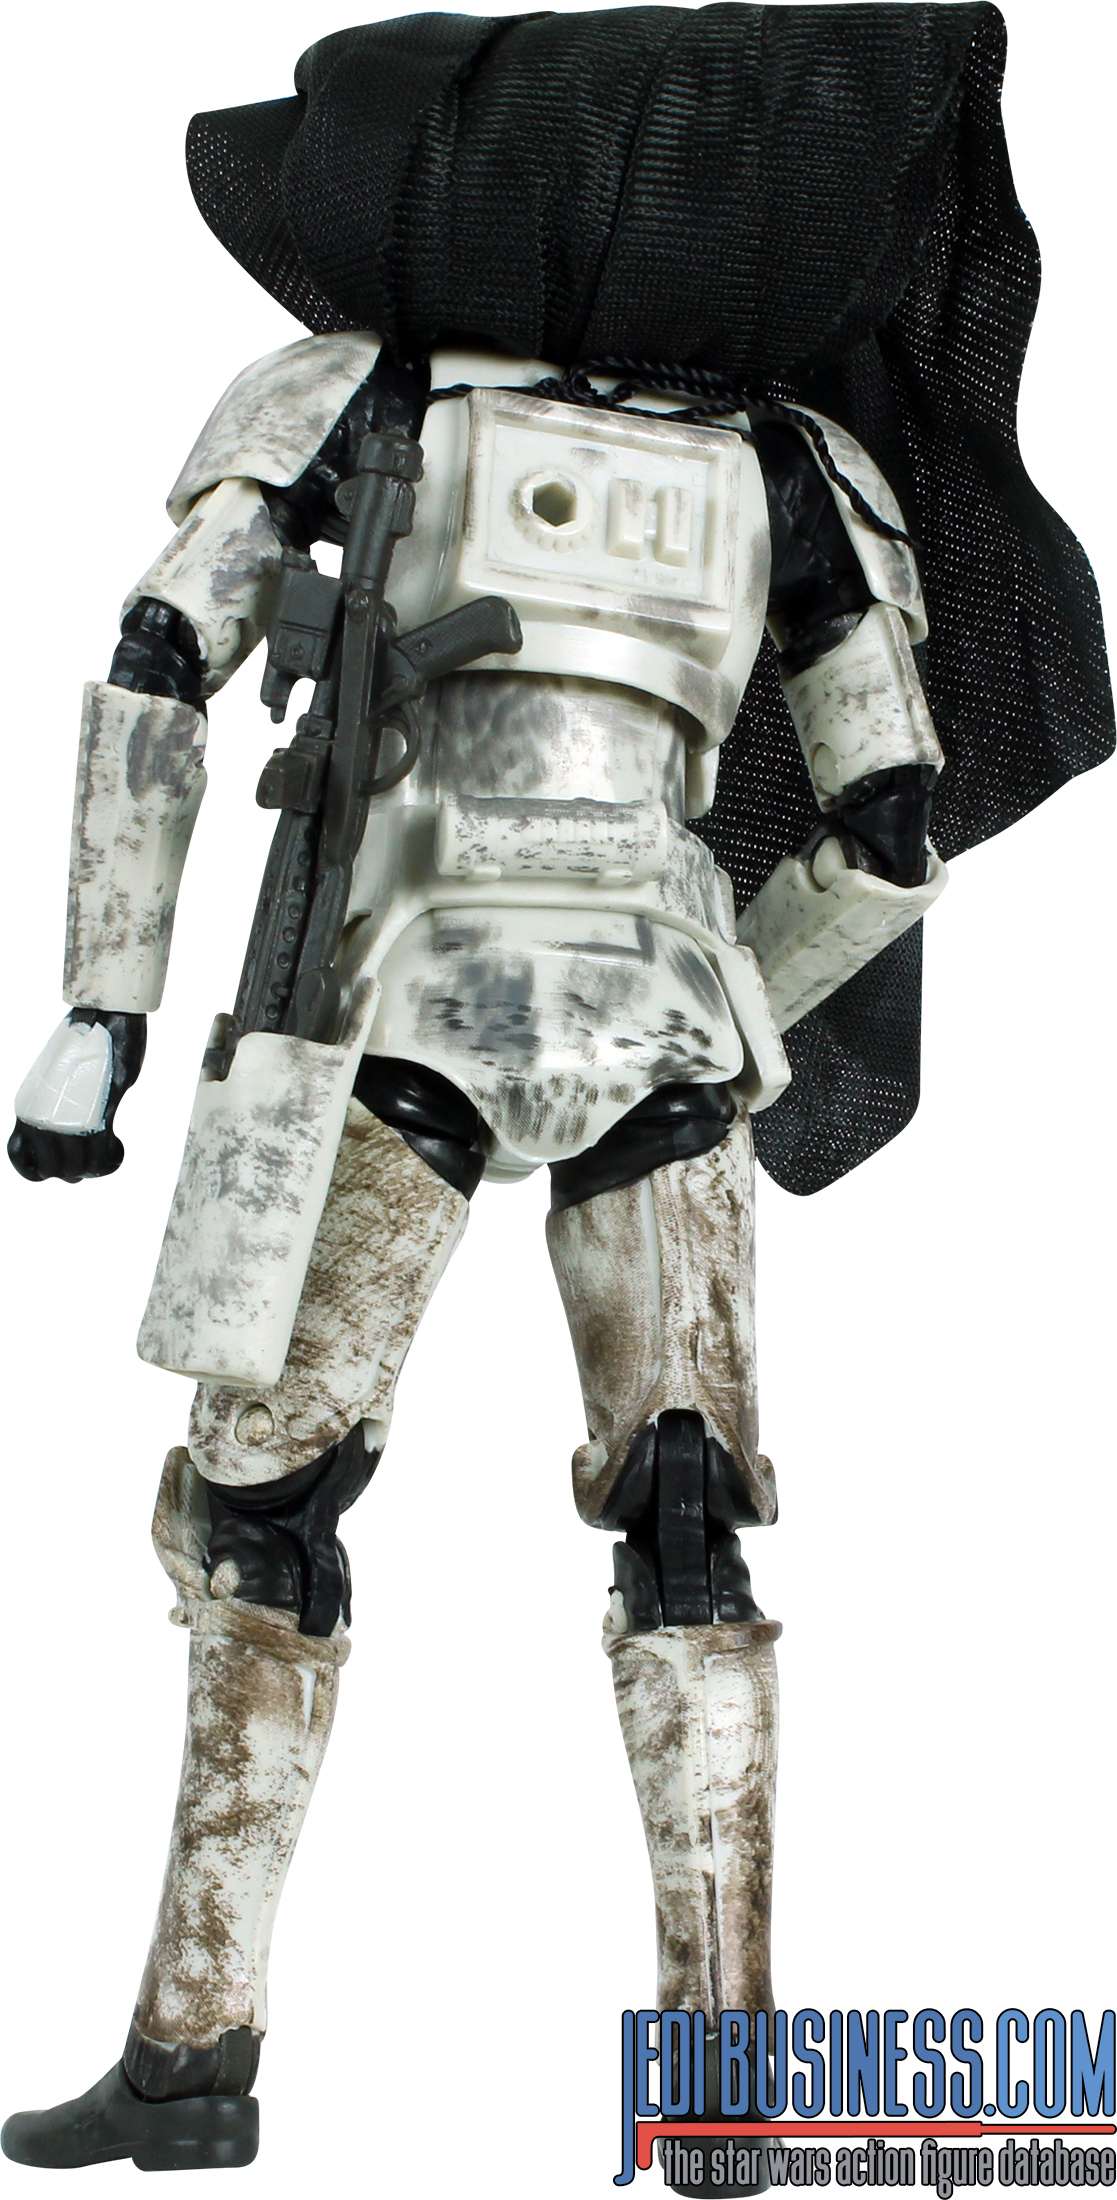 Stormtrooper Mimban